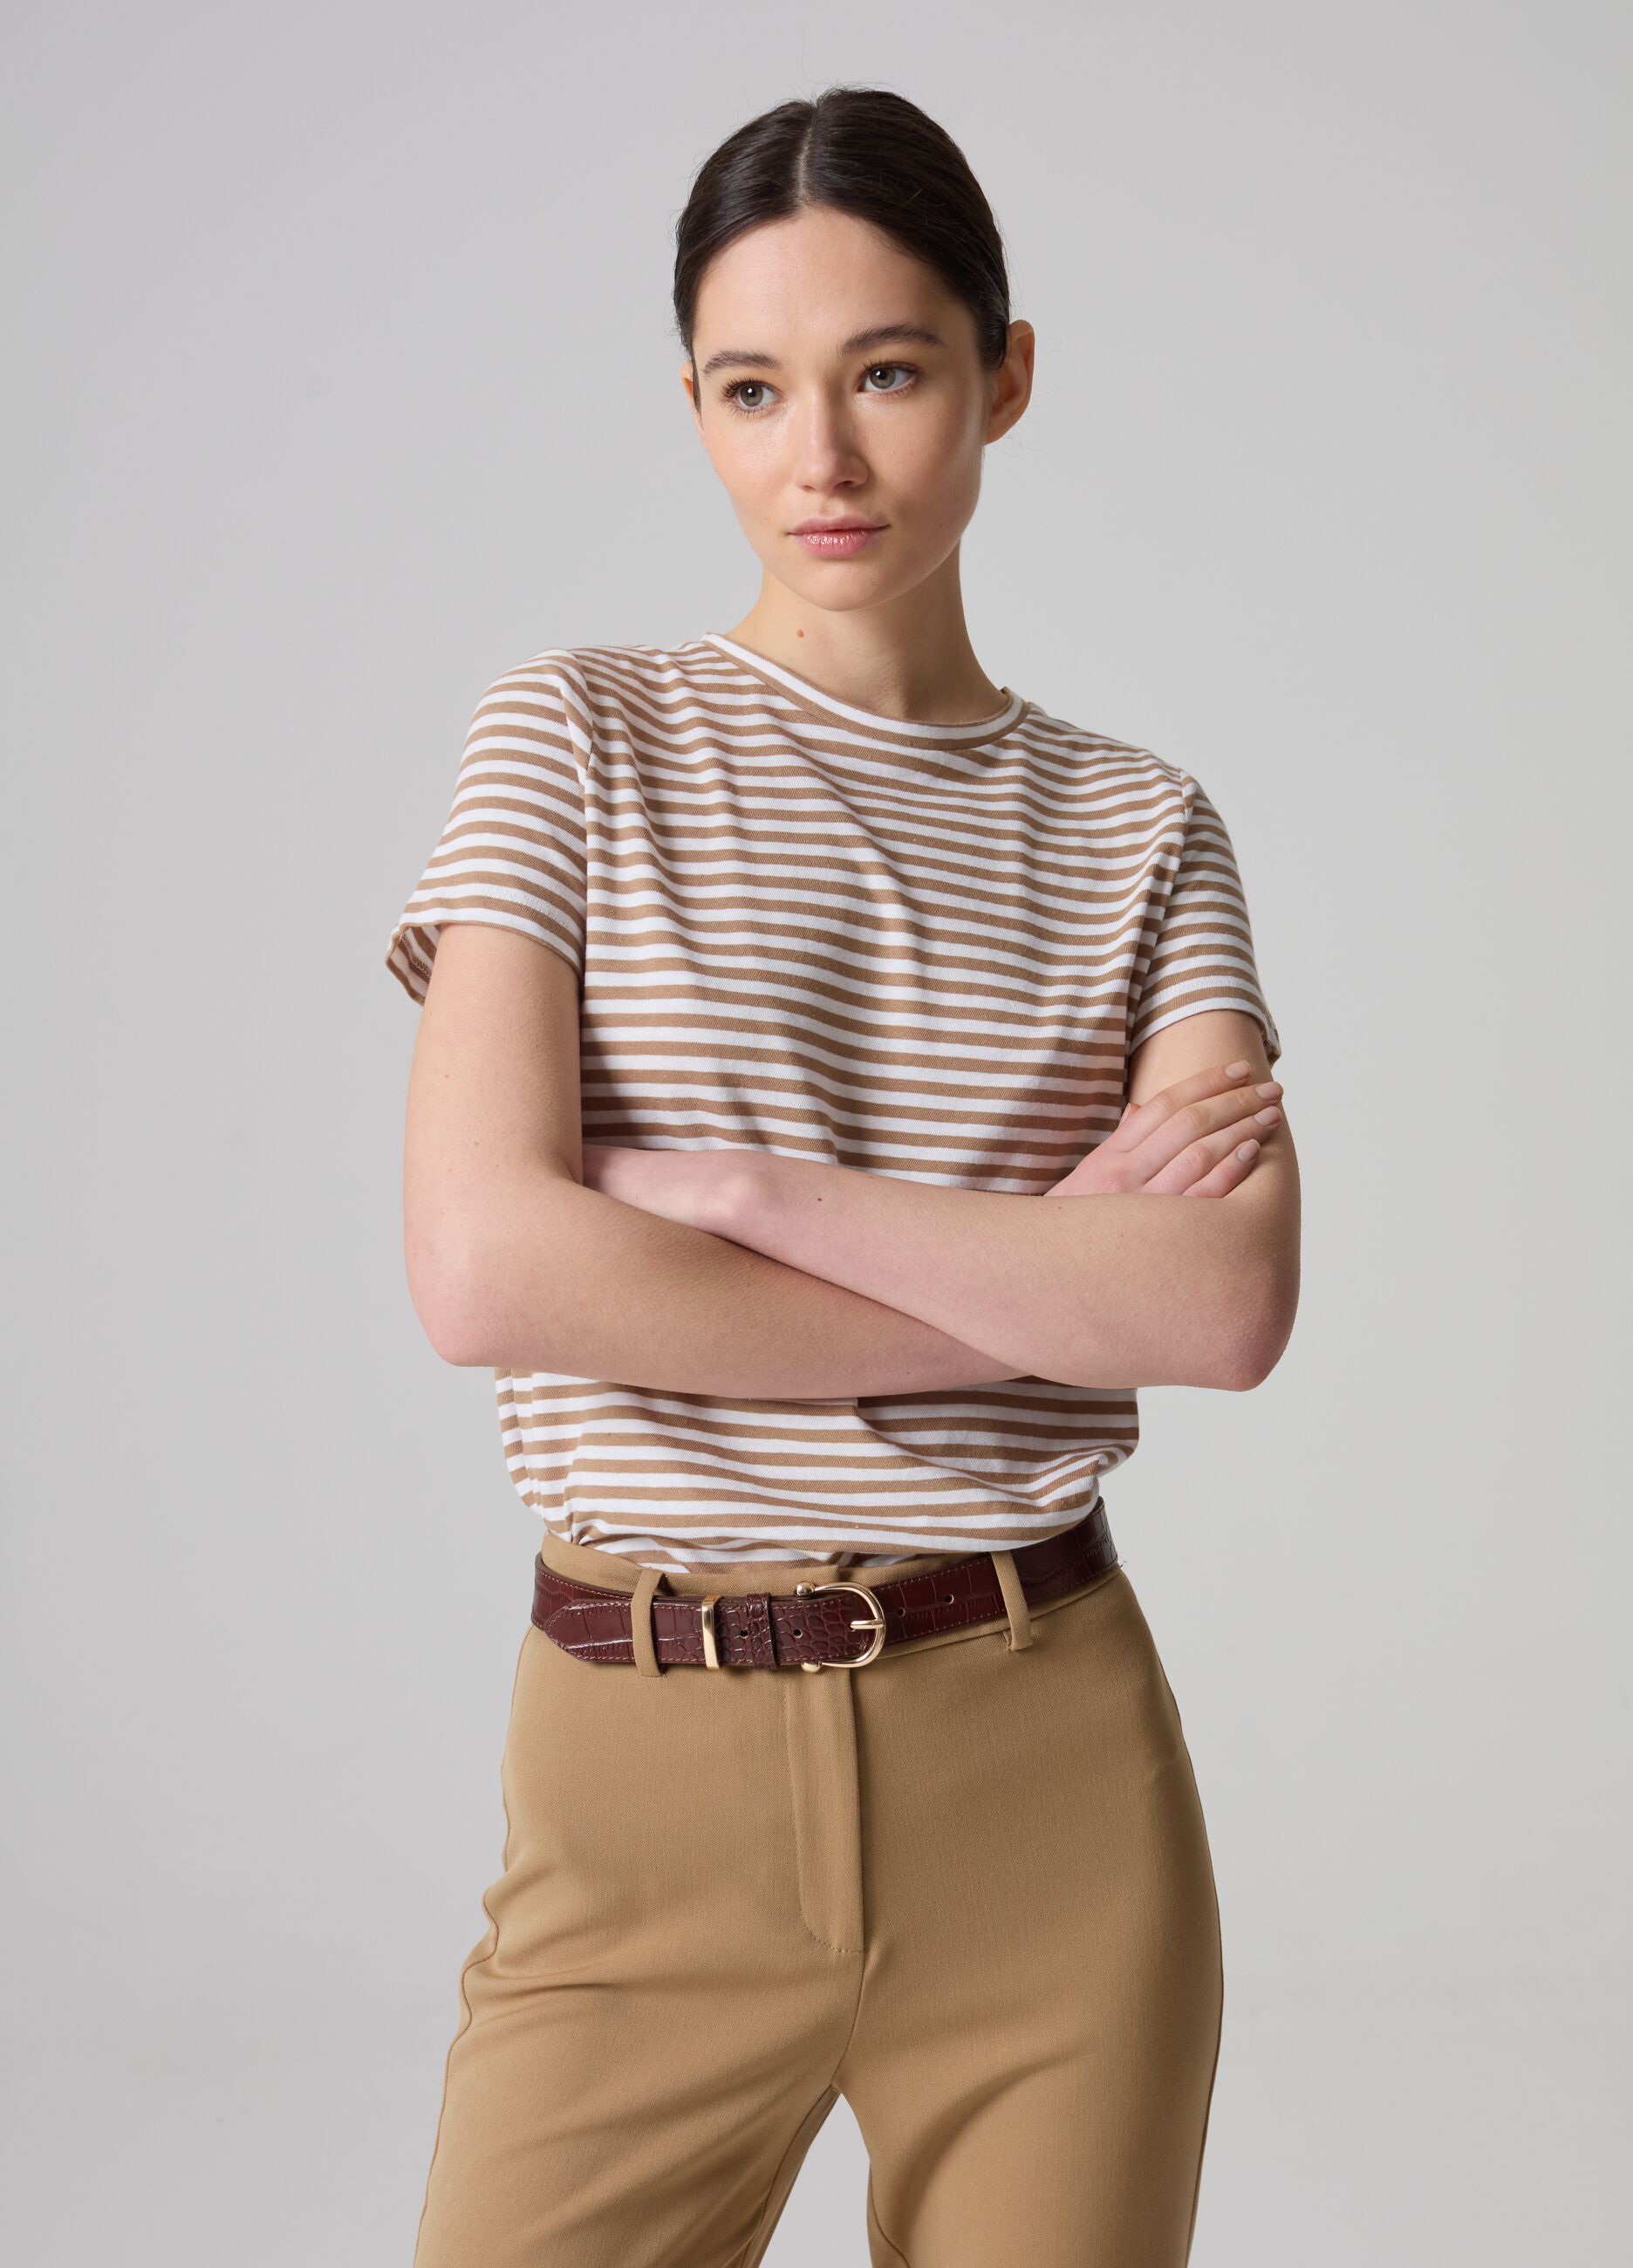 Contemporary striped T-shirt